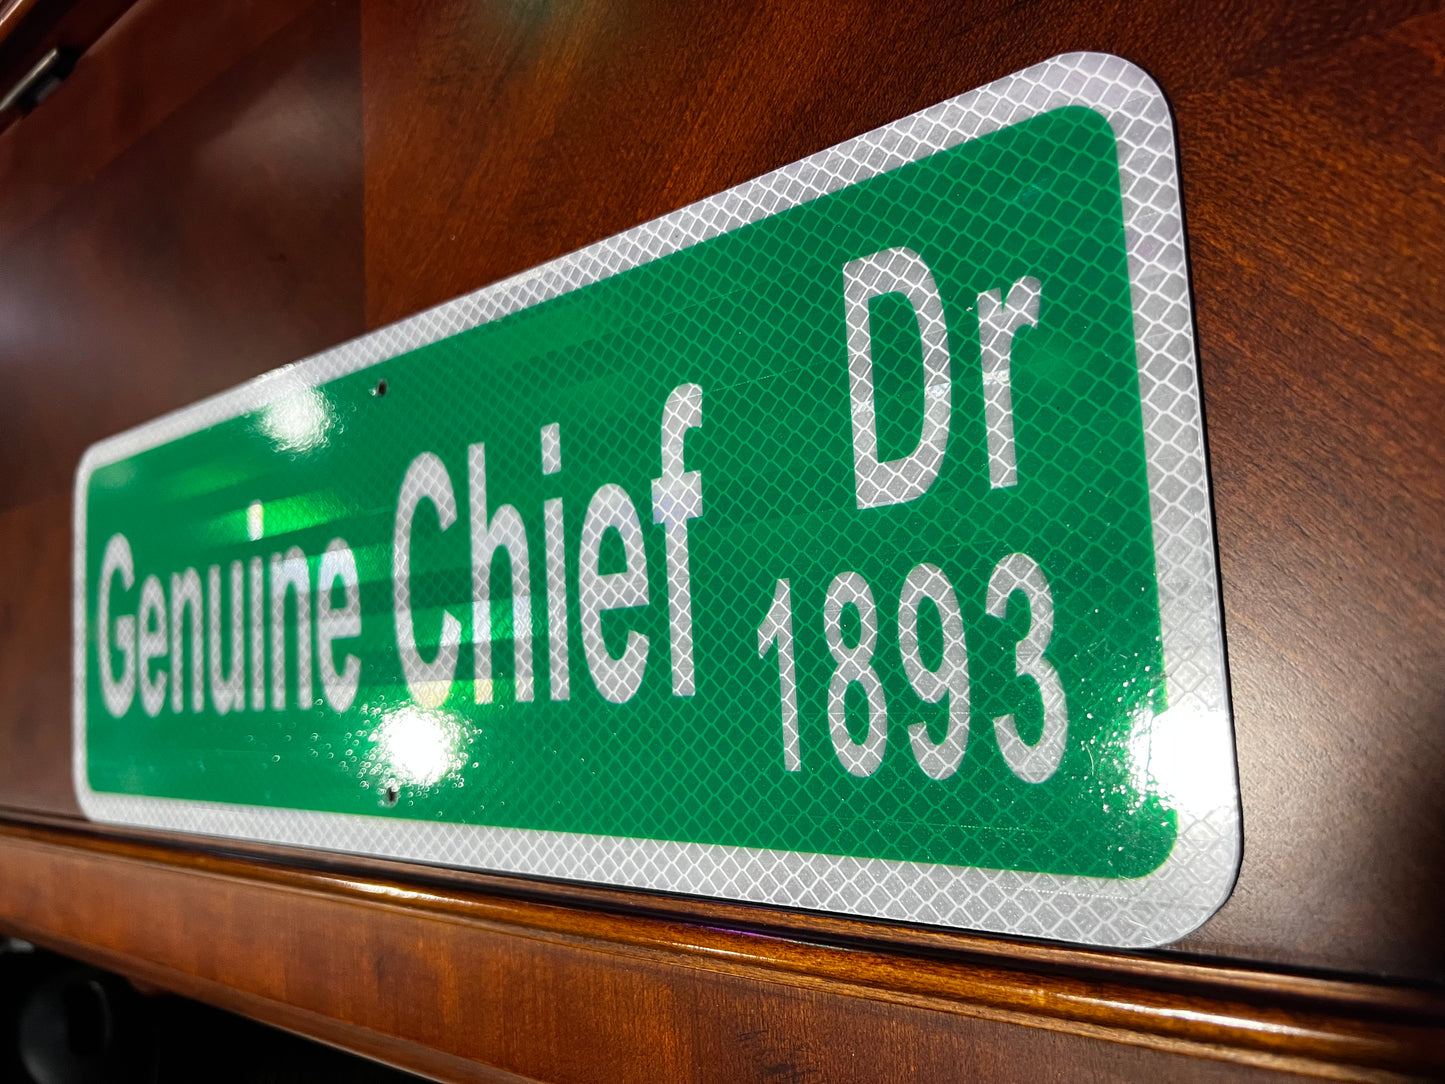 Genuine Chief 1893 Street Sign